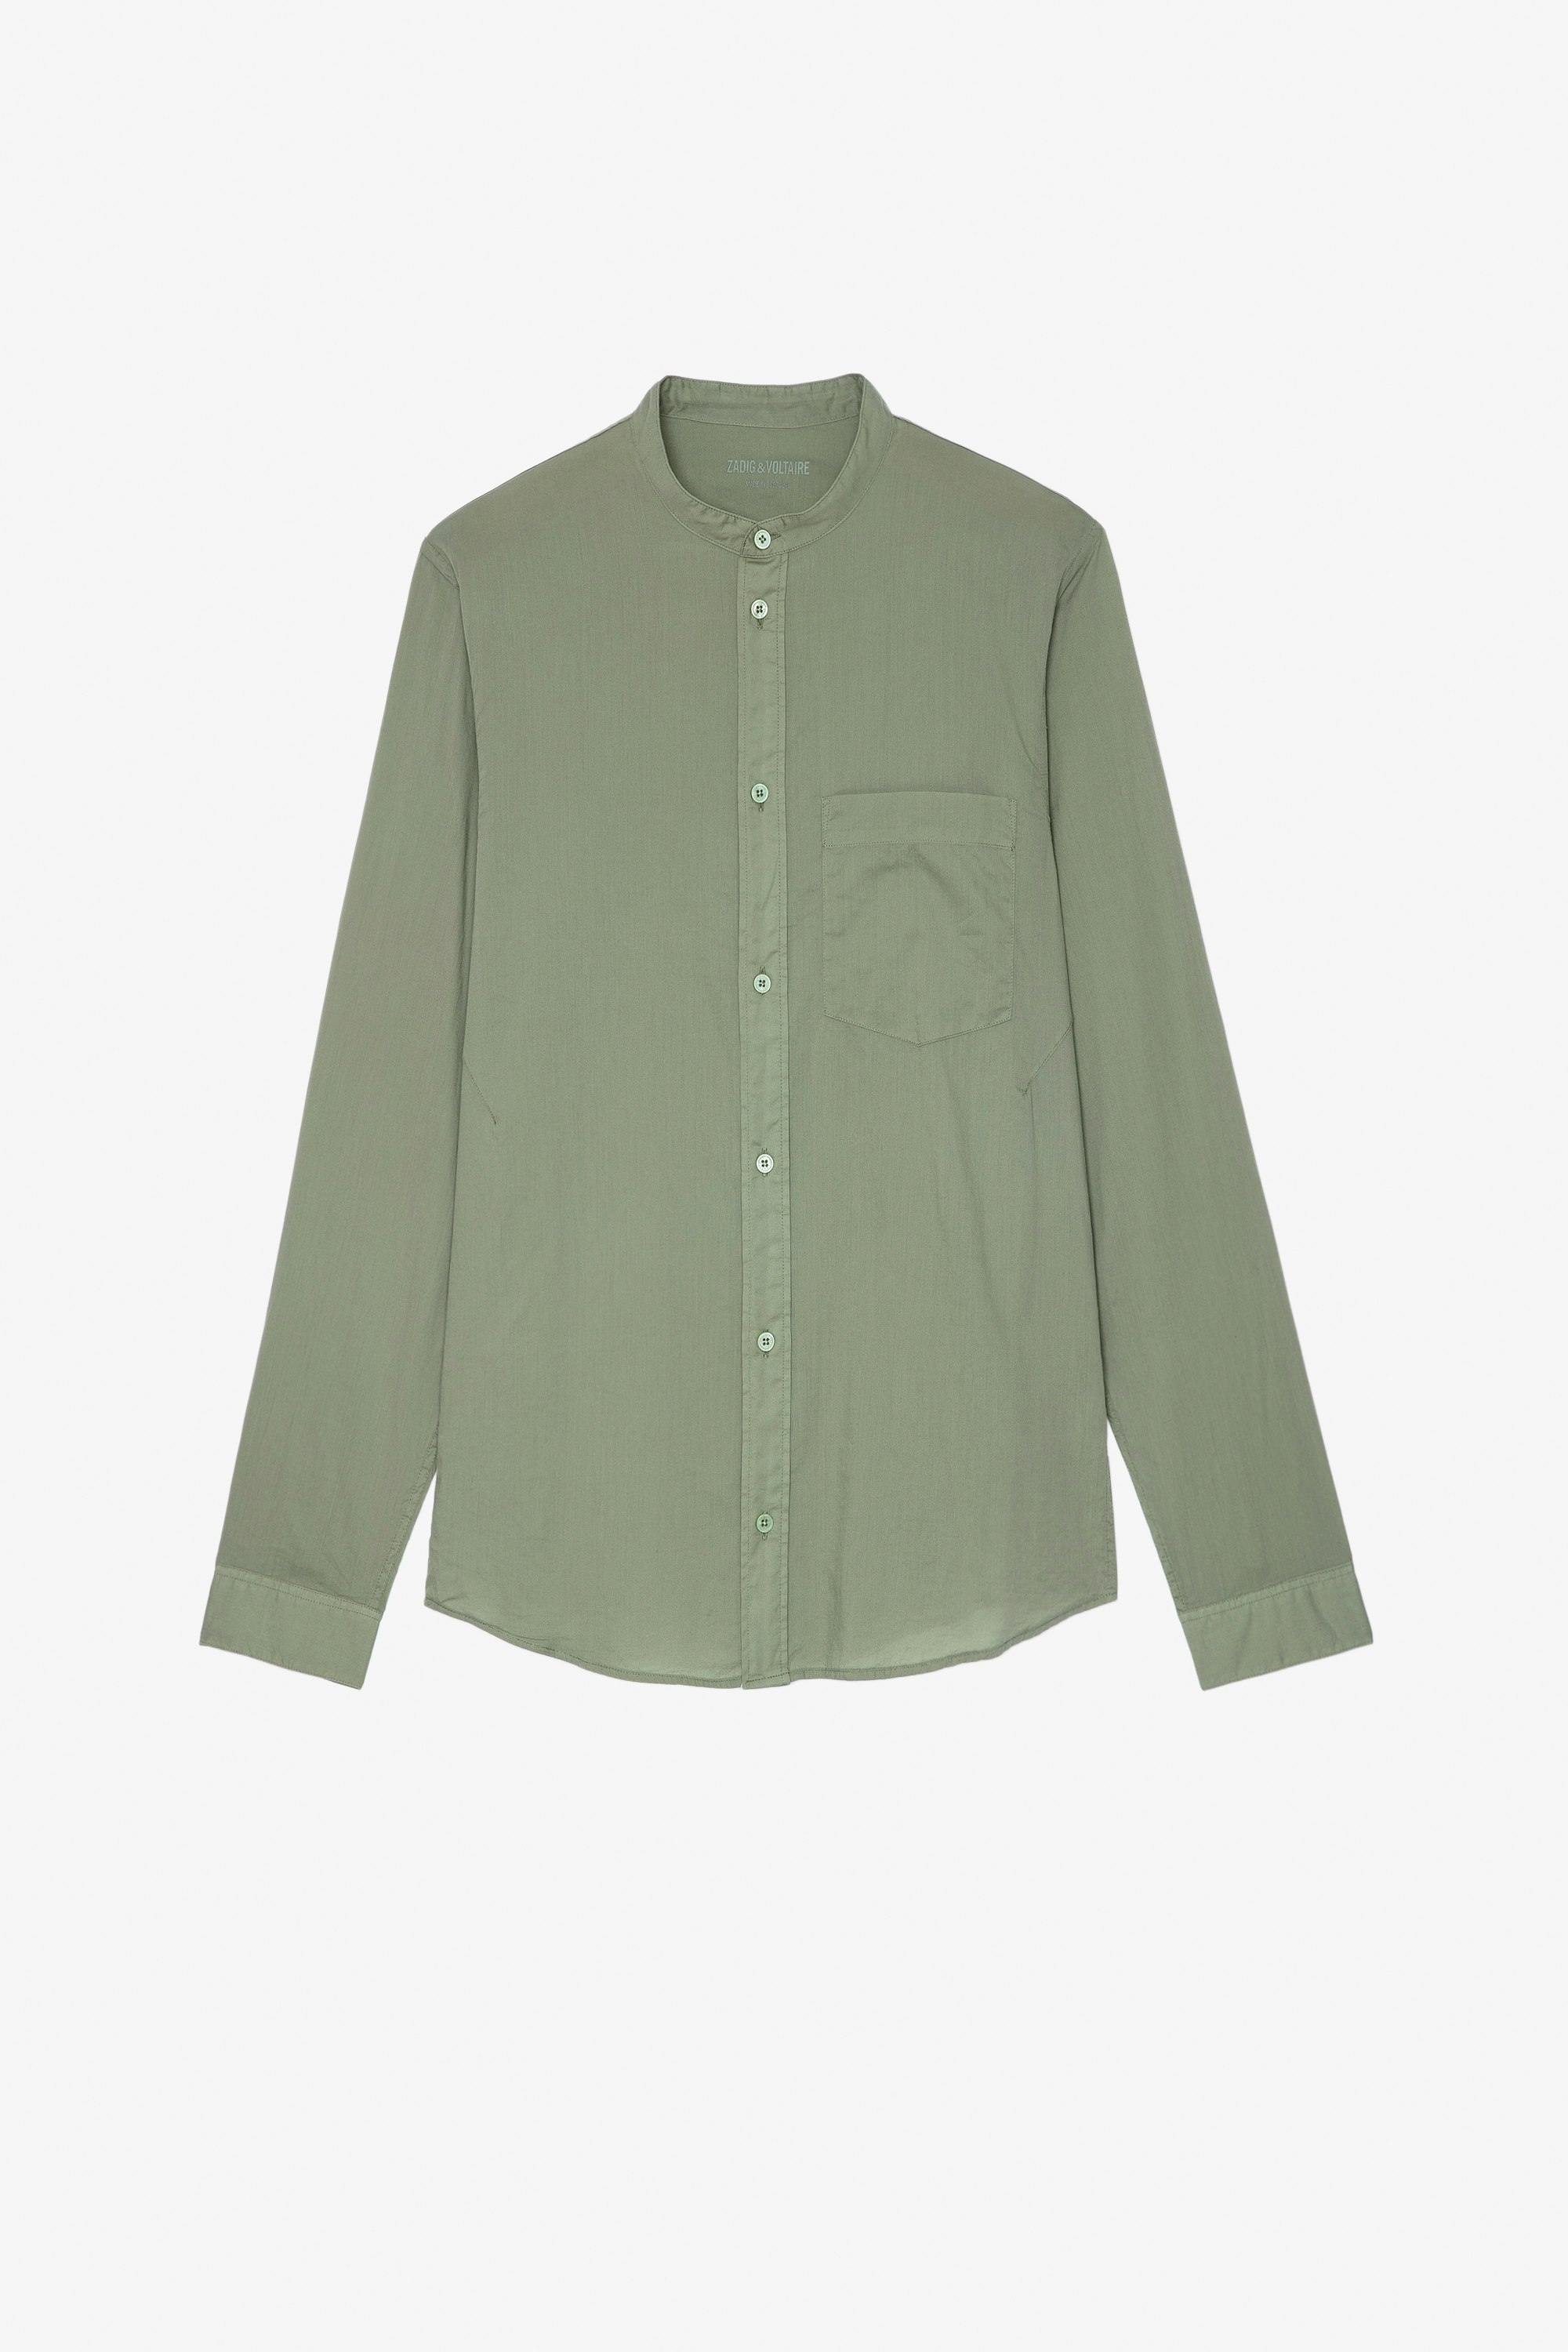 Camisa Thibaut Camisa militar verde de algodón abotonada para hombre